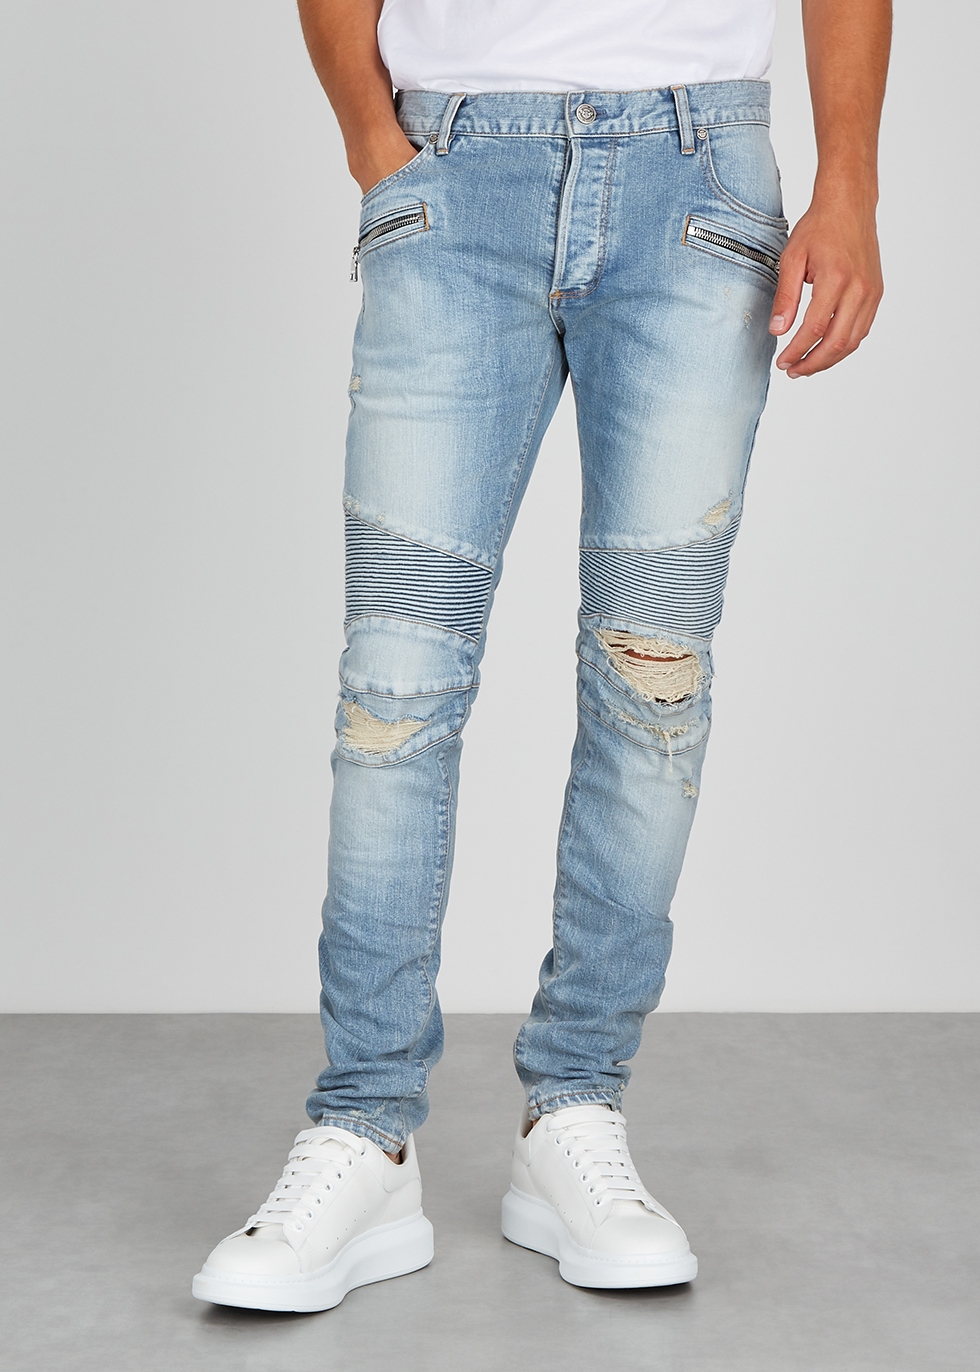 balmain's jeans